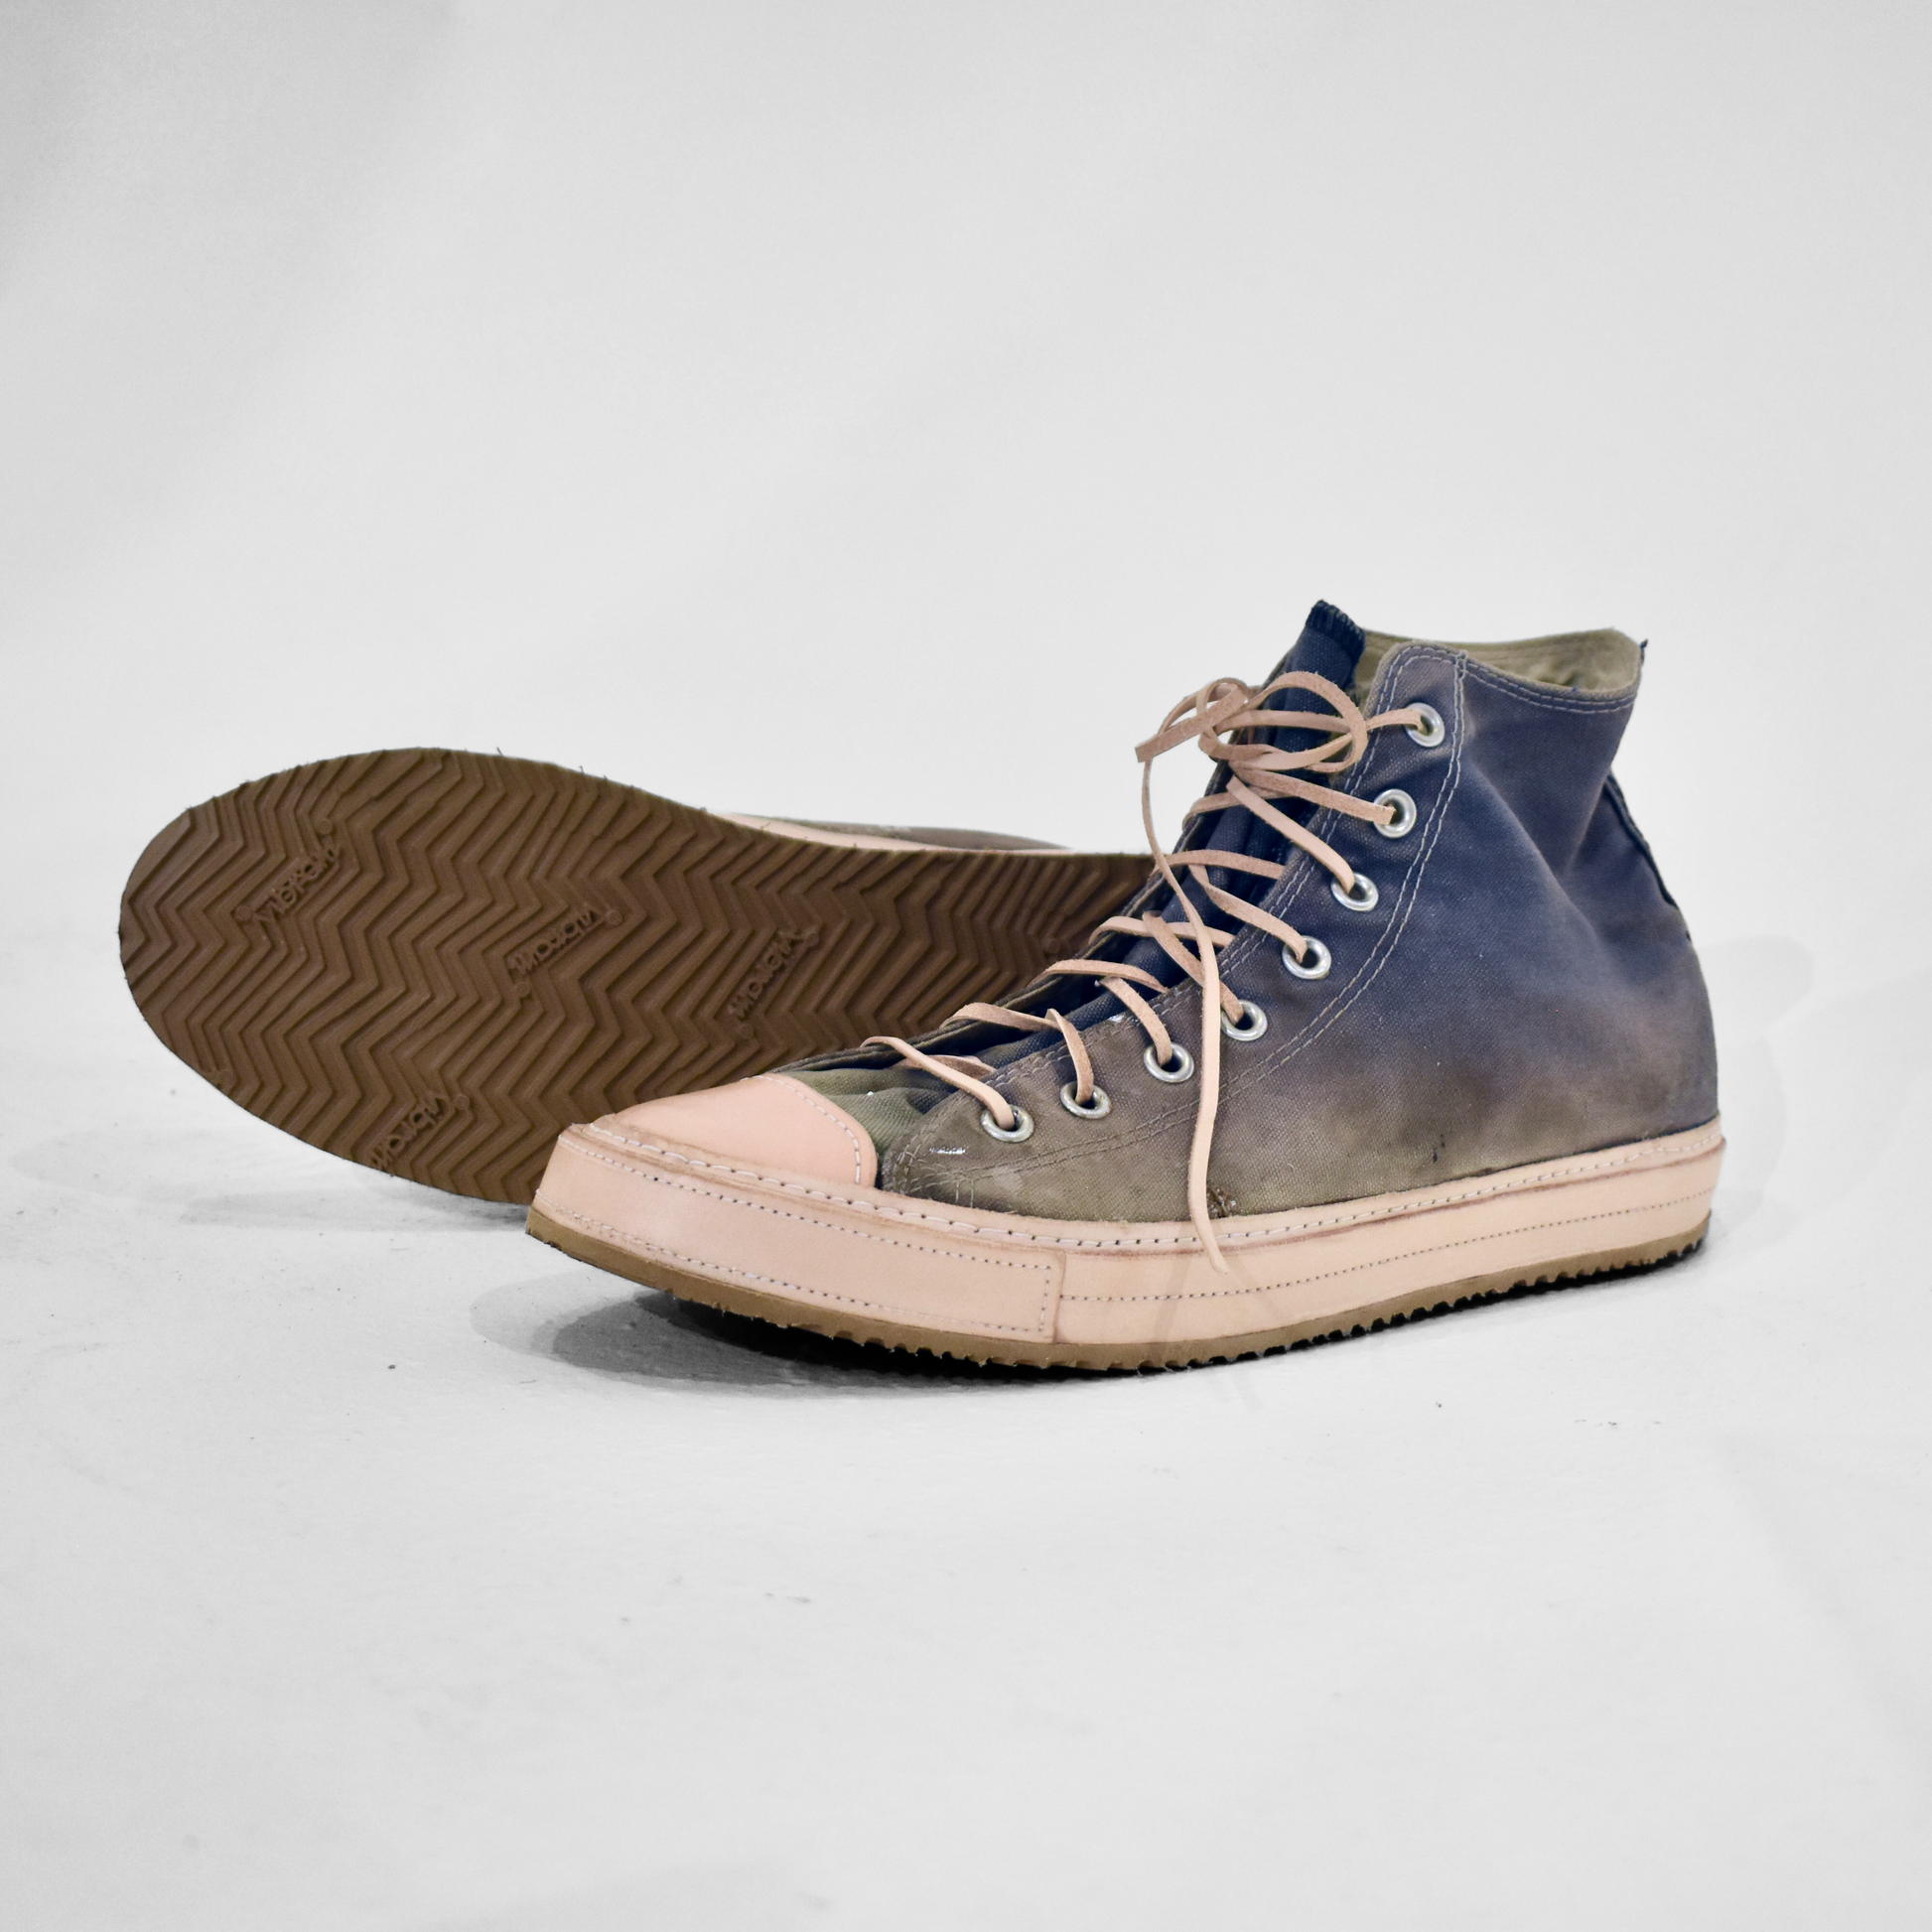 Anthony's Shoe Repair - Custom made Louis Vuitton X Converse